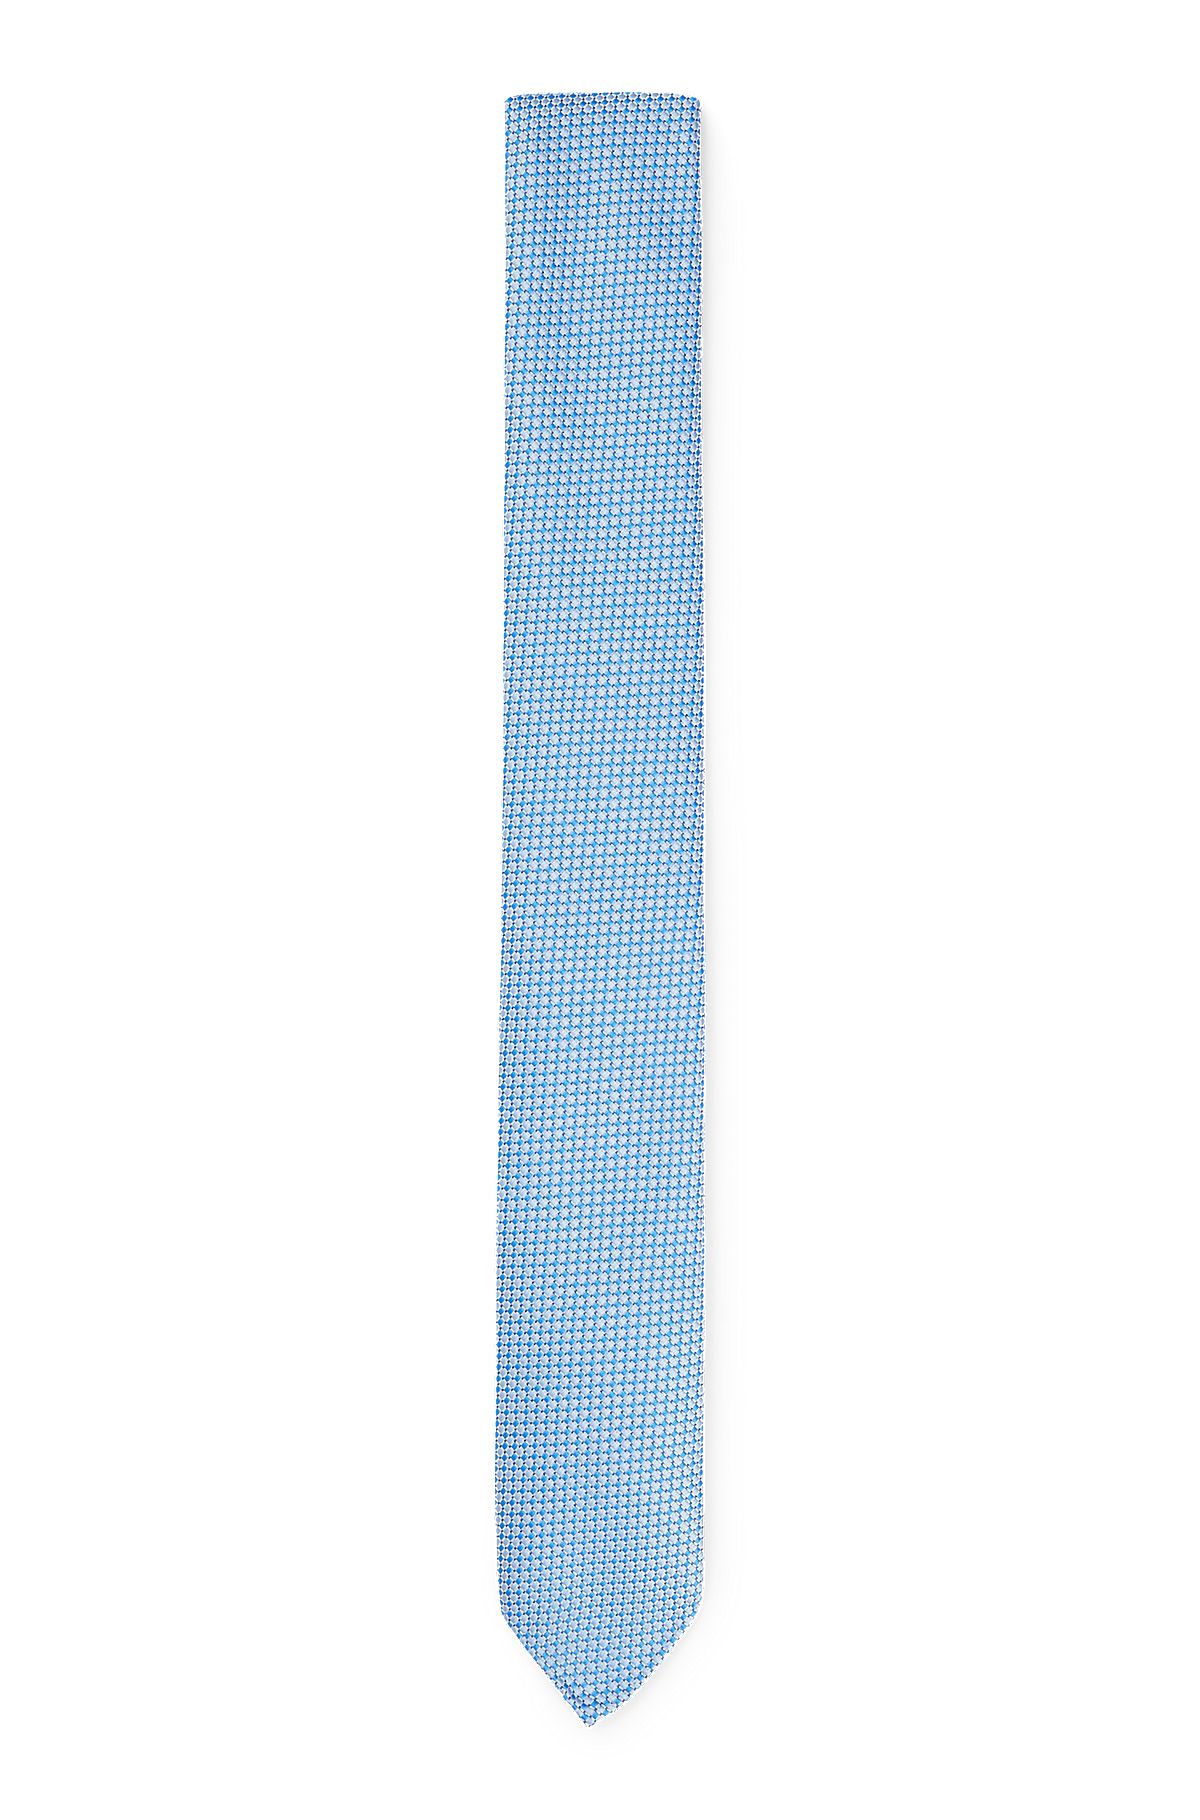 Cravate à micro motif en tissu recyclé, bleu clair